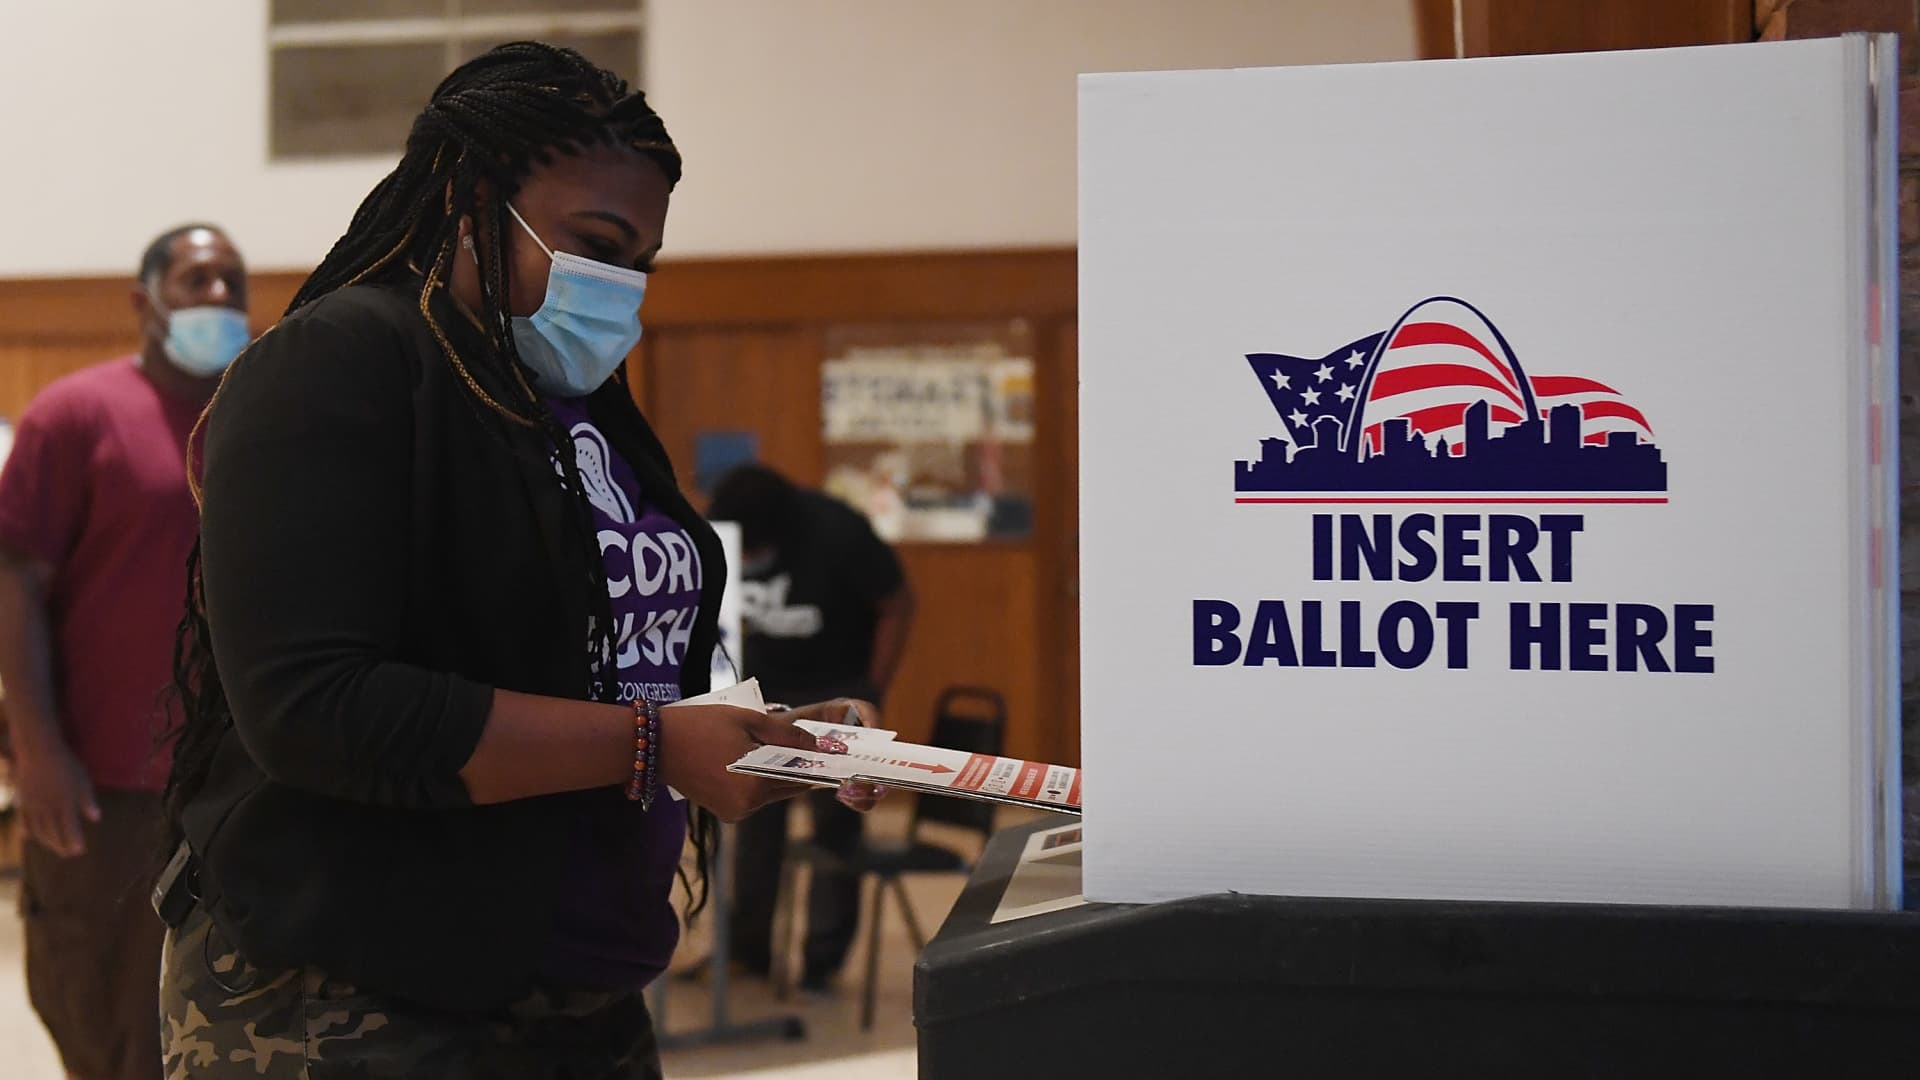 Missouri Democratic congressional candidate Cori Bush casts her ballot on August 4, 2020 at Gambrinus Hall in St Louis, Missouri.